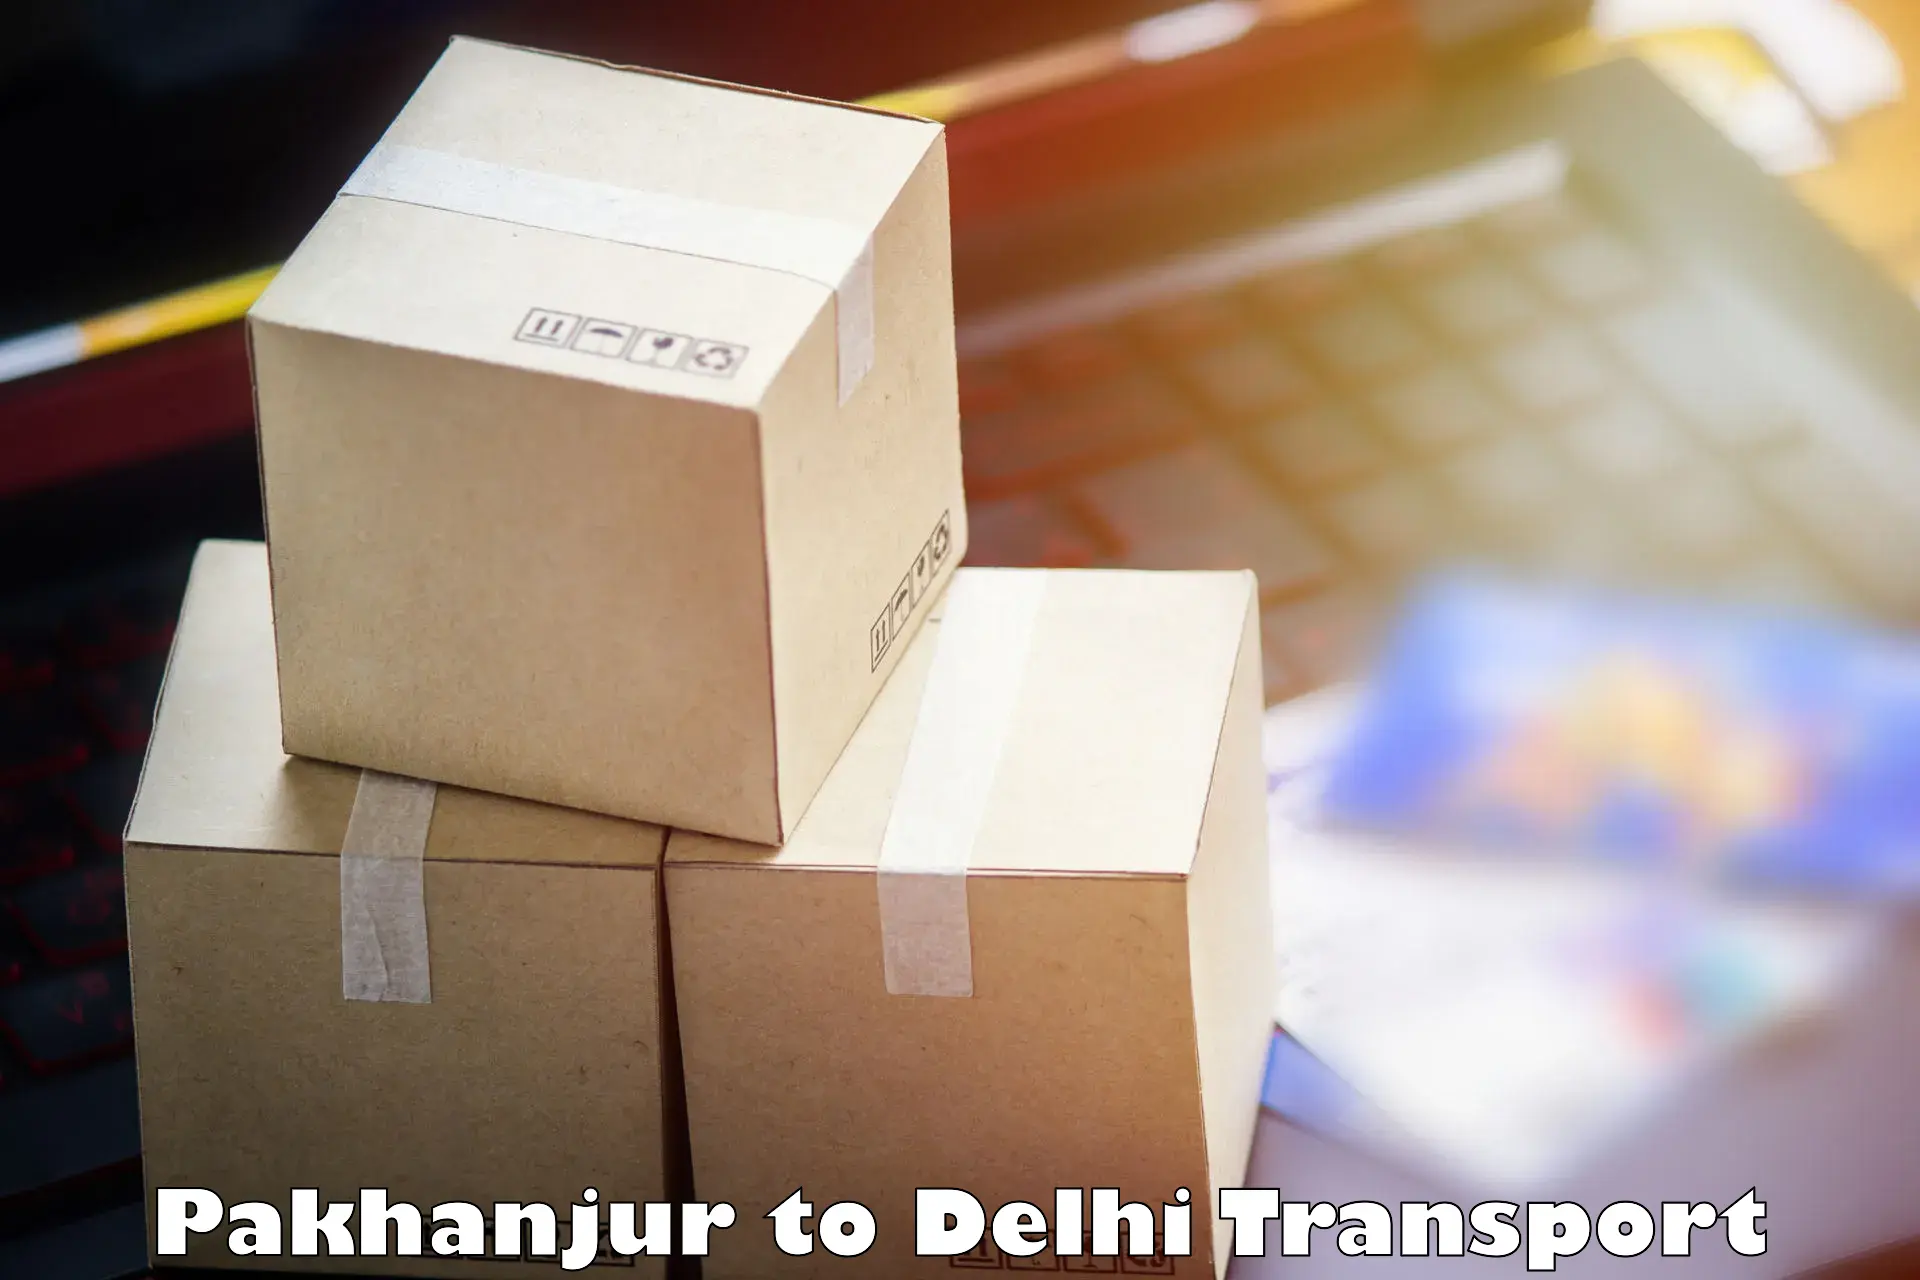 Sending bike to another city Pakhanjur to University of Delhi